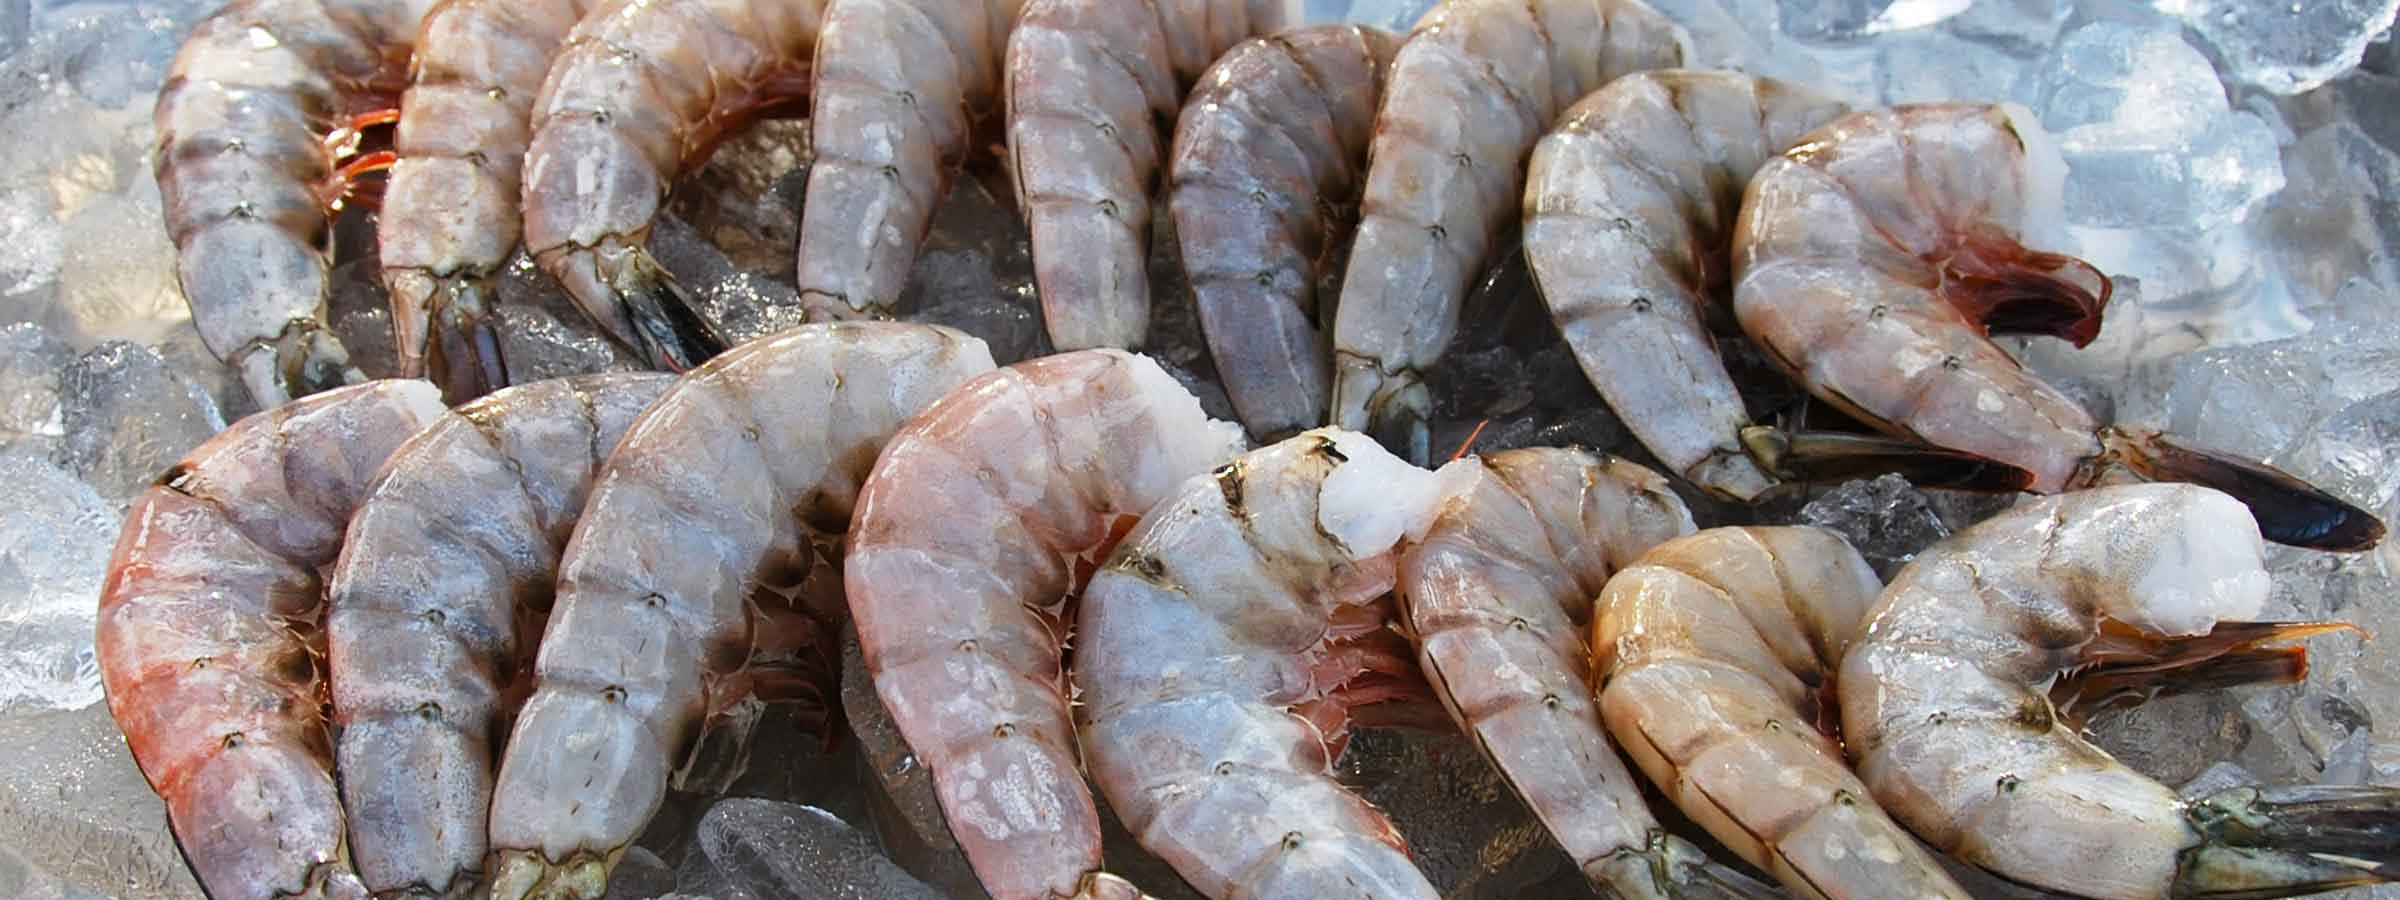 deep sea raw shrimp on ice